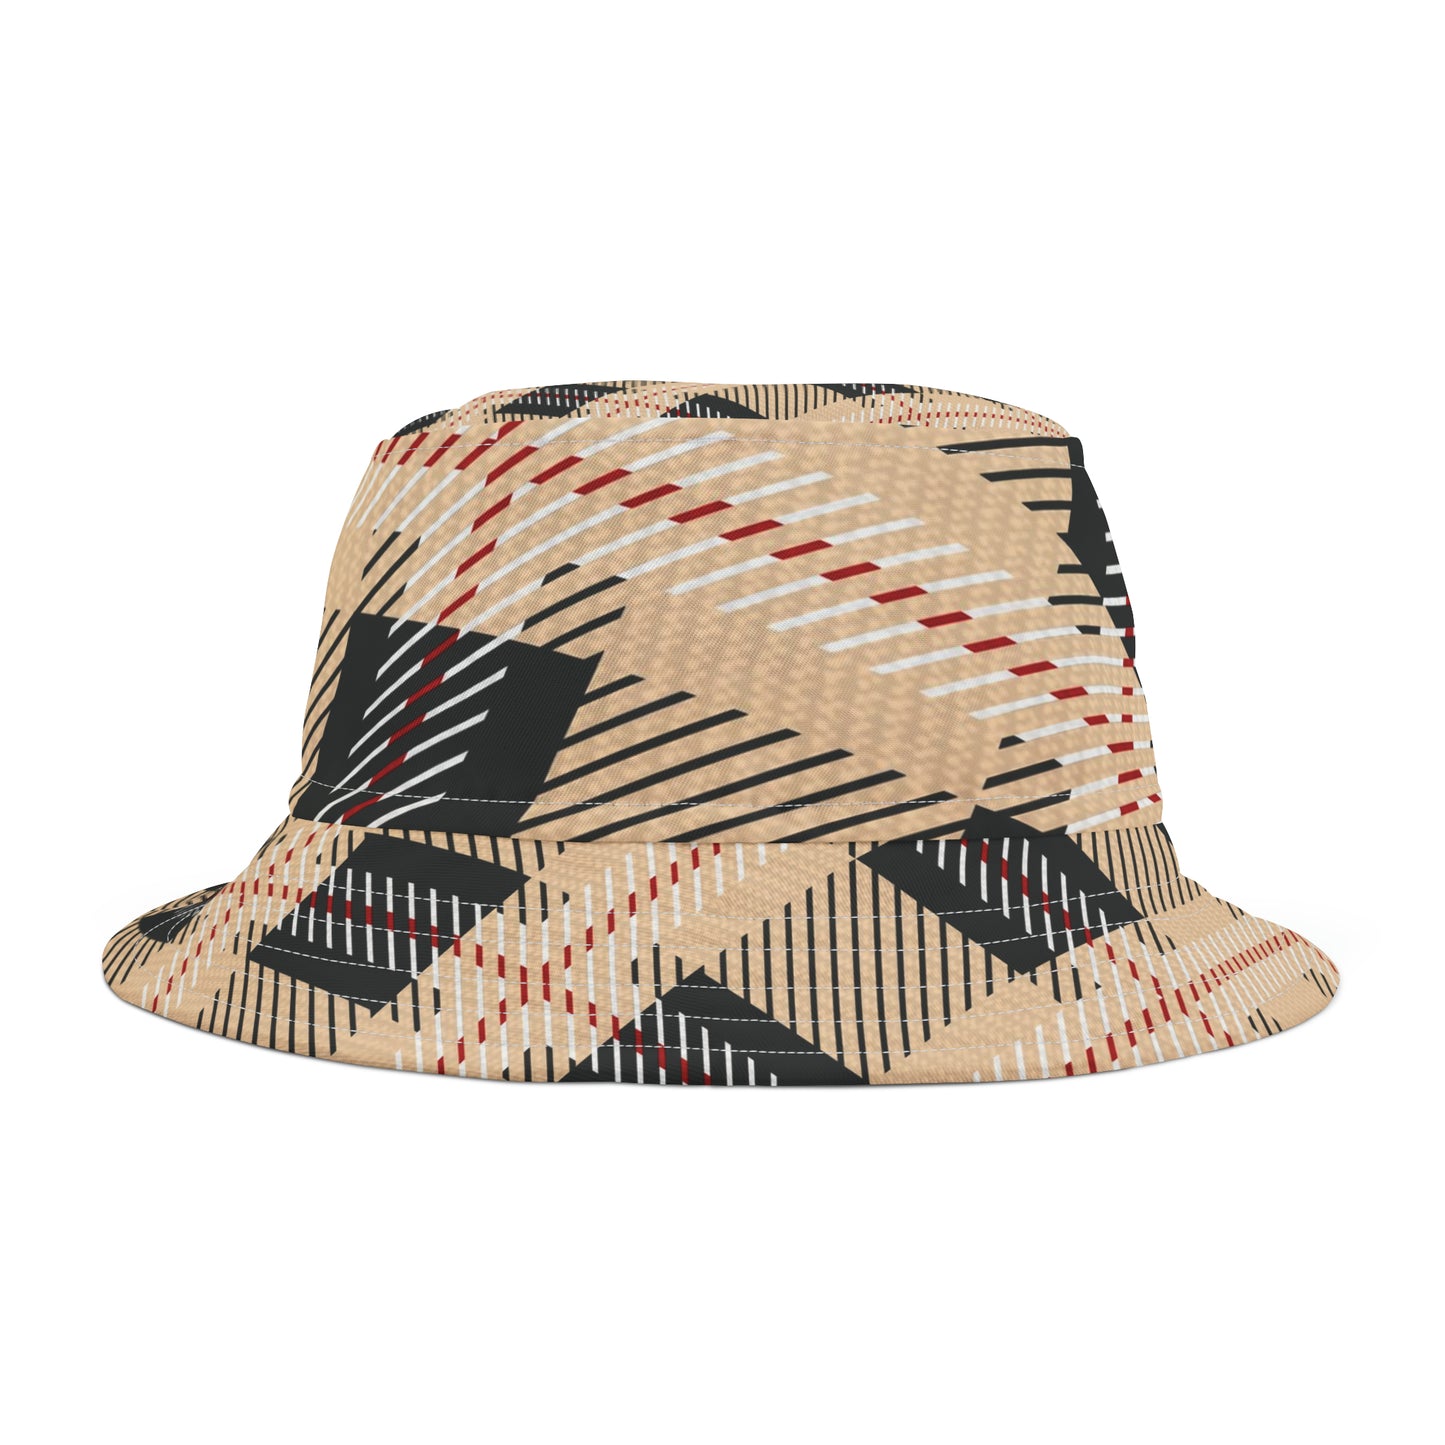 Scottish Plaid Tan-Black-Red/White Bucket Hat